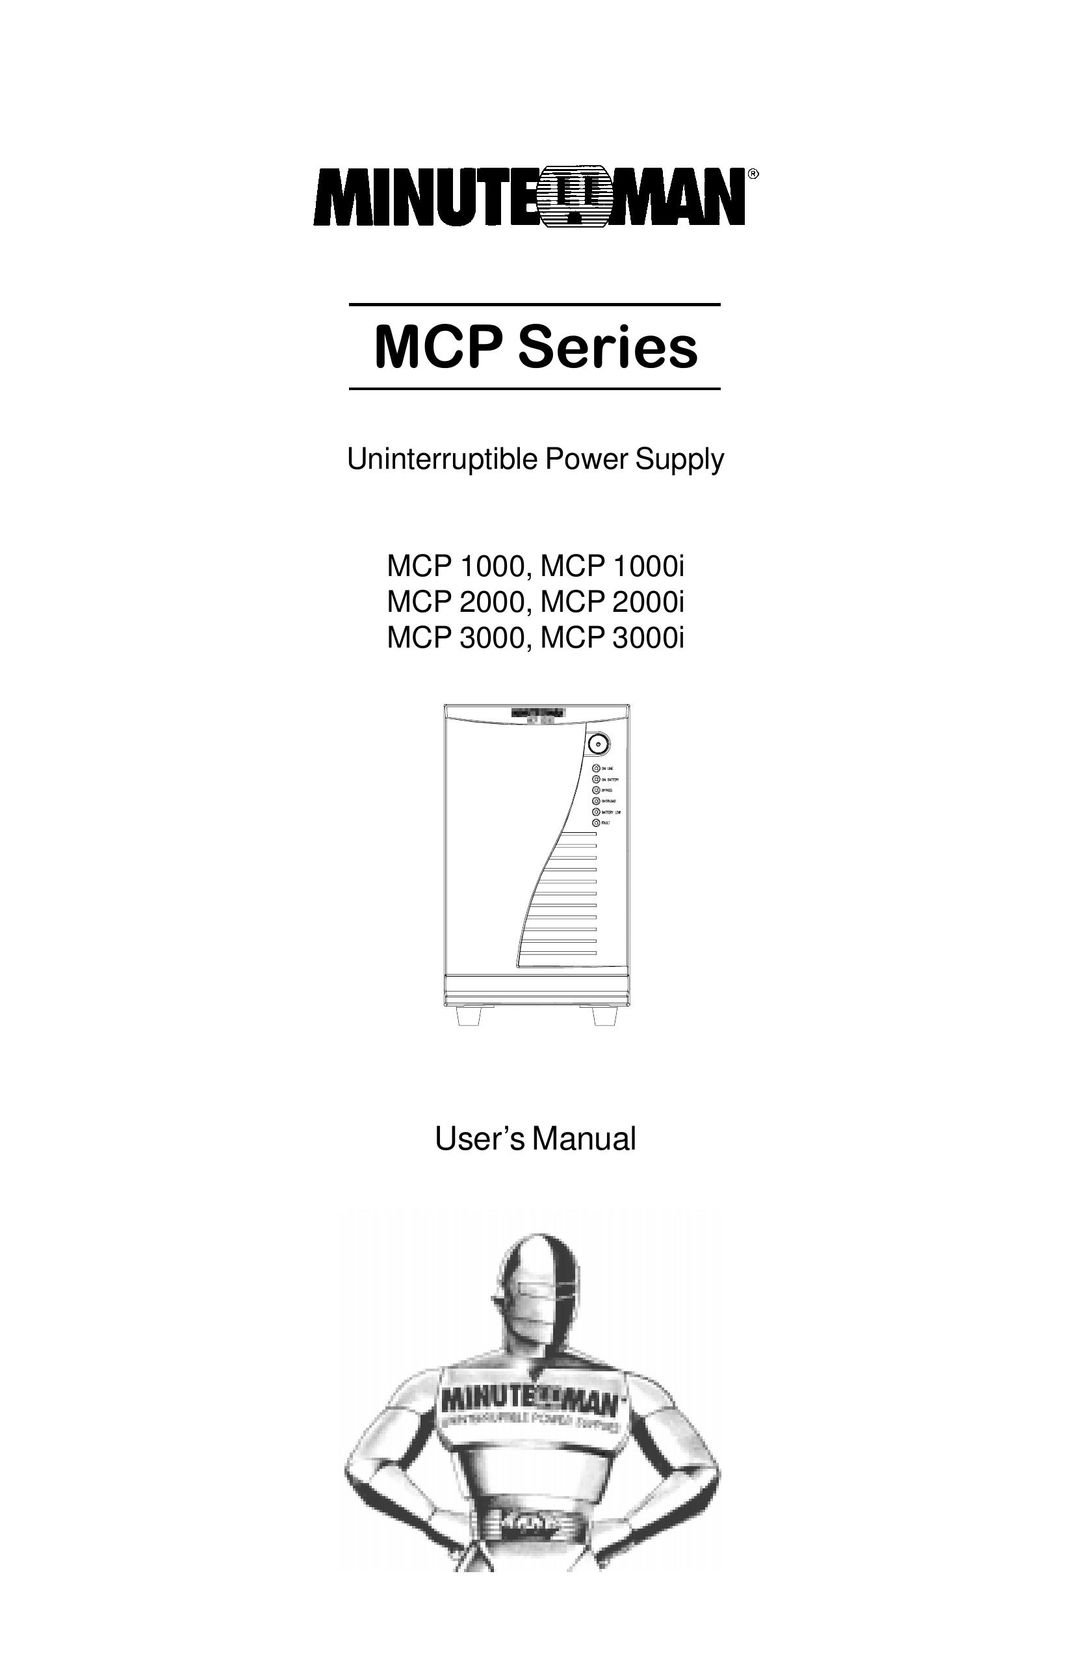 Minuteman UPS MCP 1000 Power Supply User Manual (Page 1)